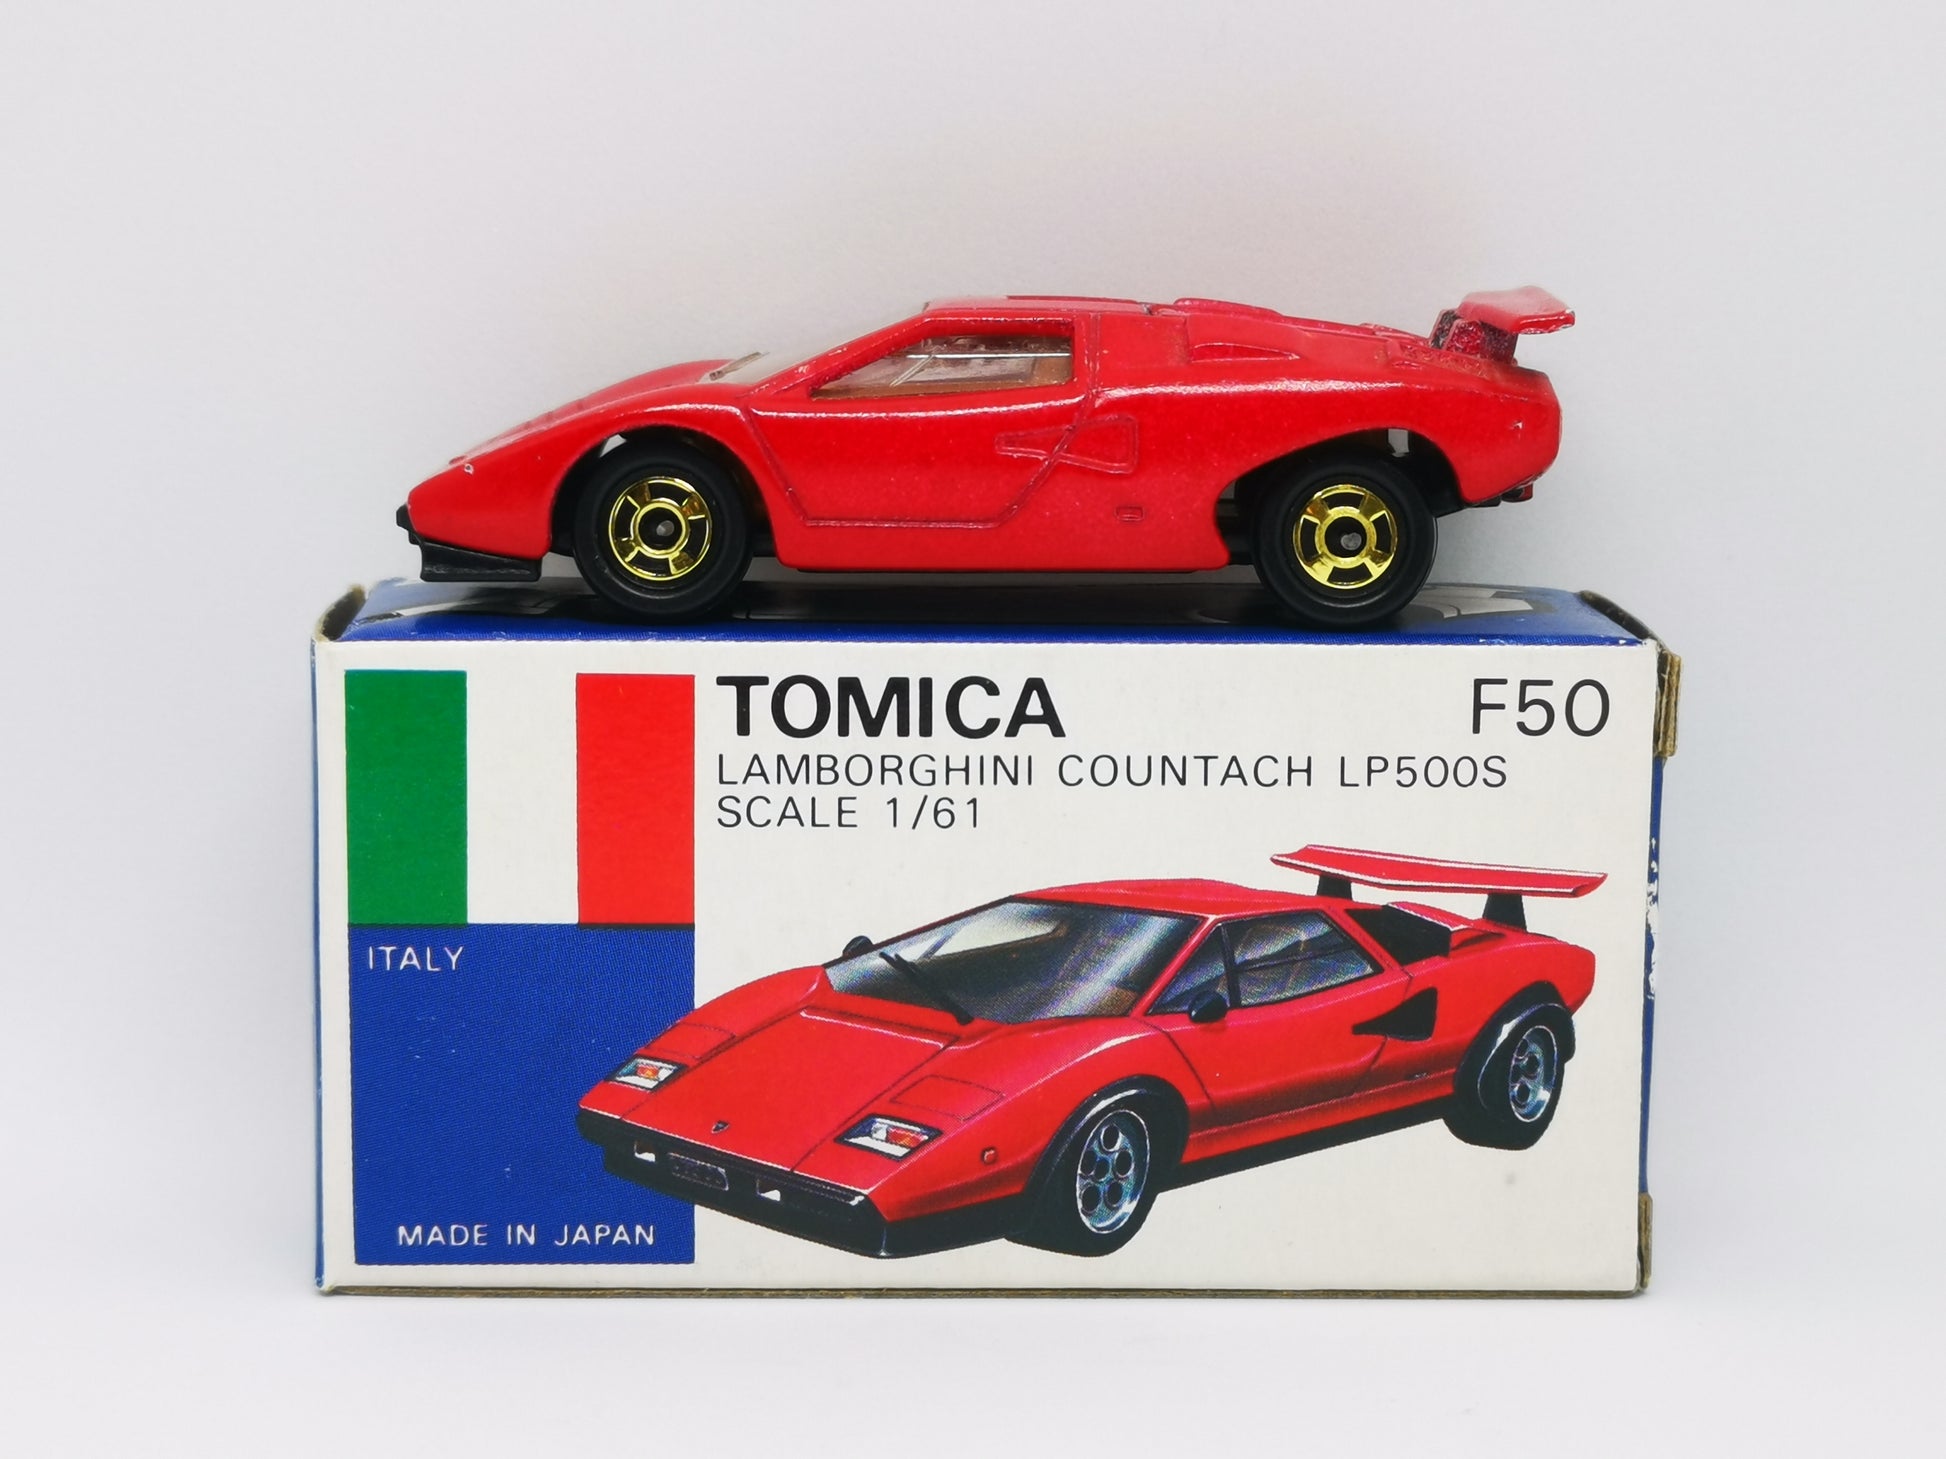 1979 Tomica F50 Oversea Exclusive Lamborghini Countach Takara Tomy